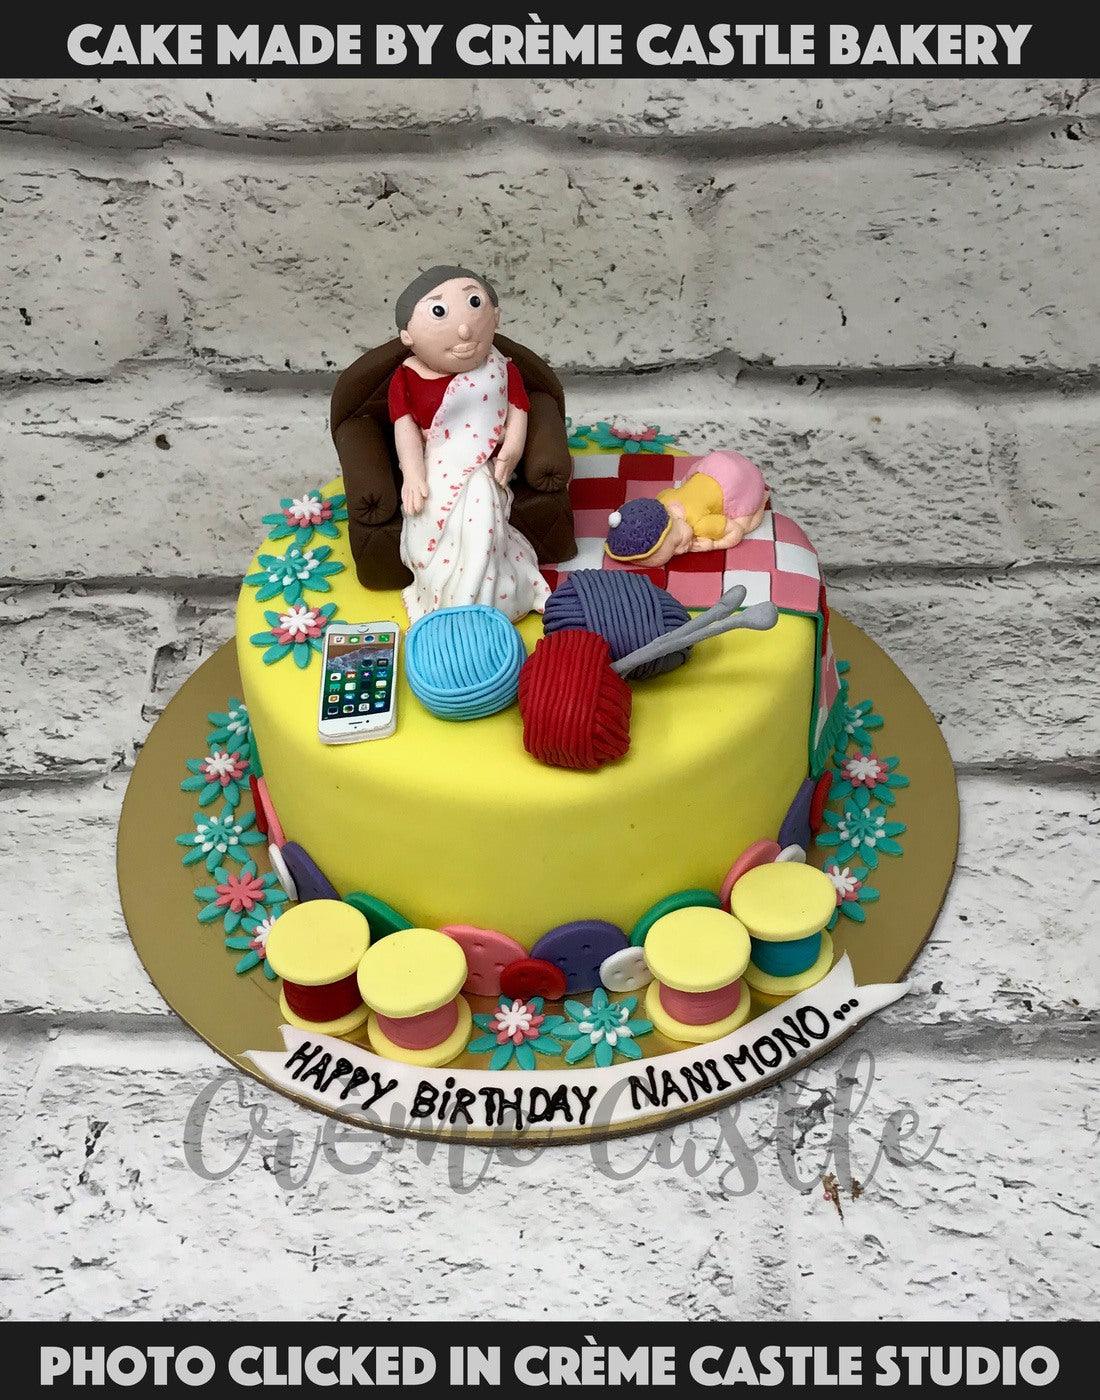 grandma cake – Crave by Leena